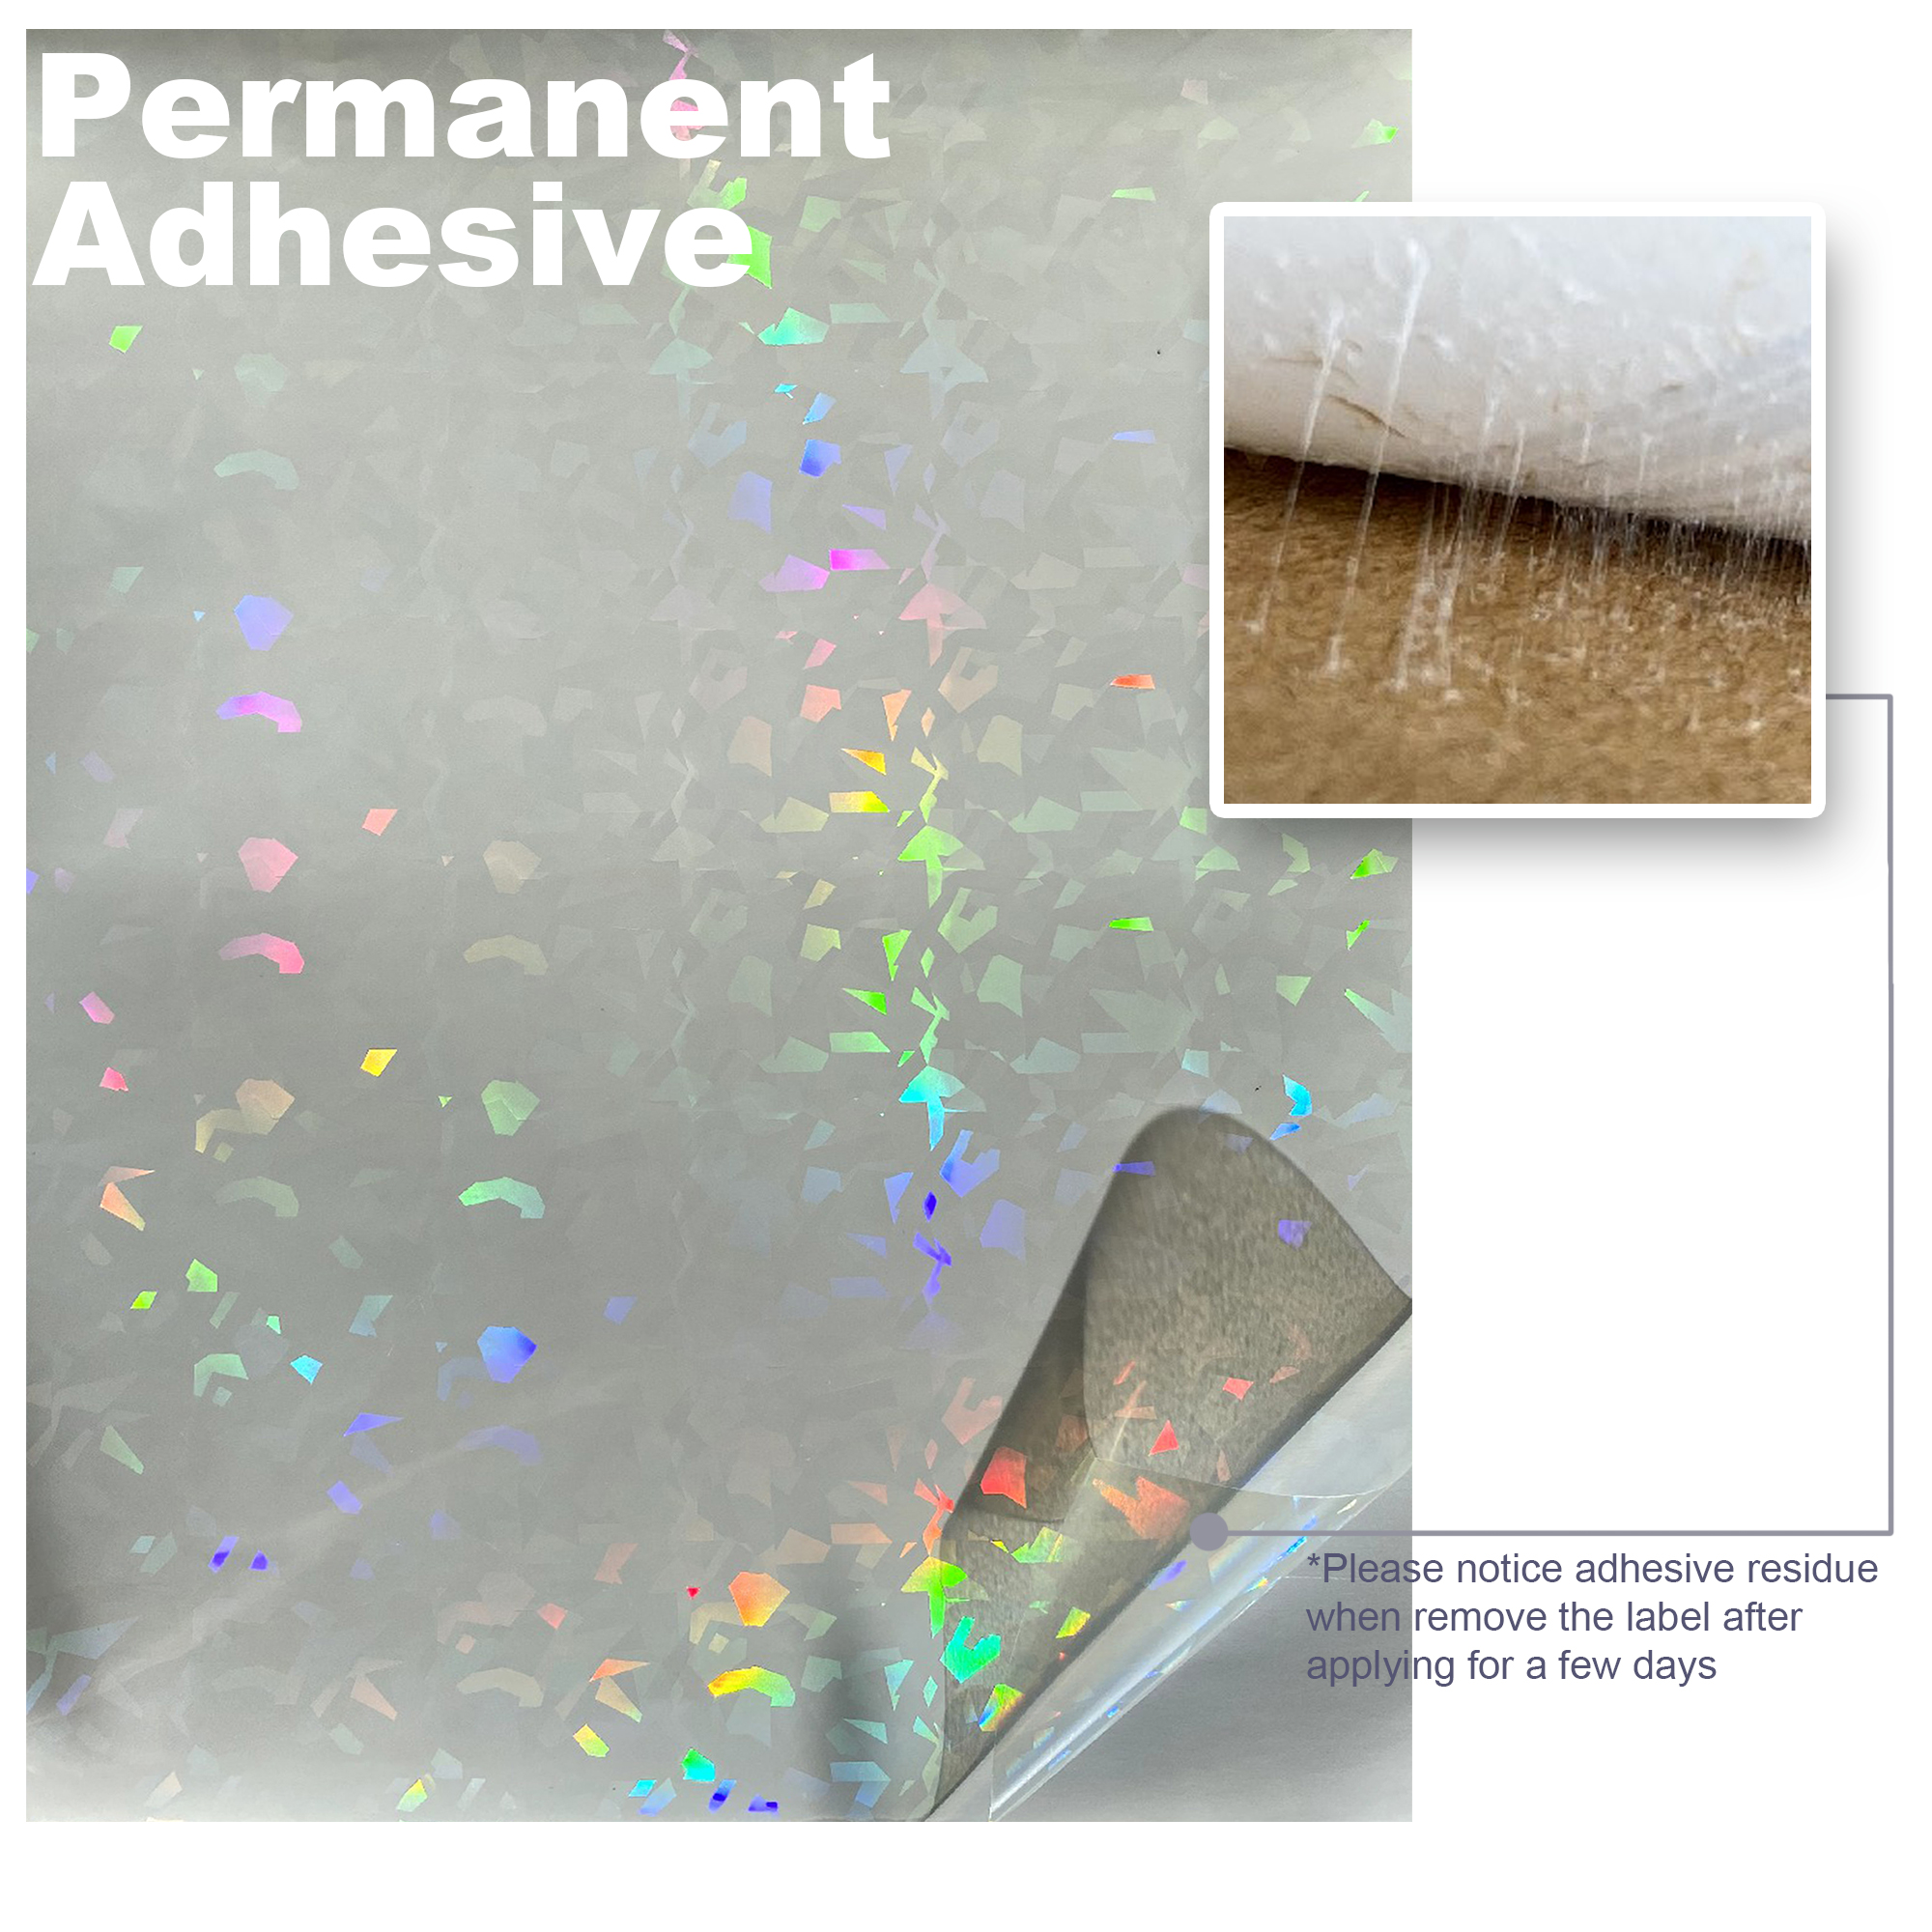 Self - Adhesive Rainbow/Pattern Holographic Permanent Vinyl